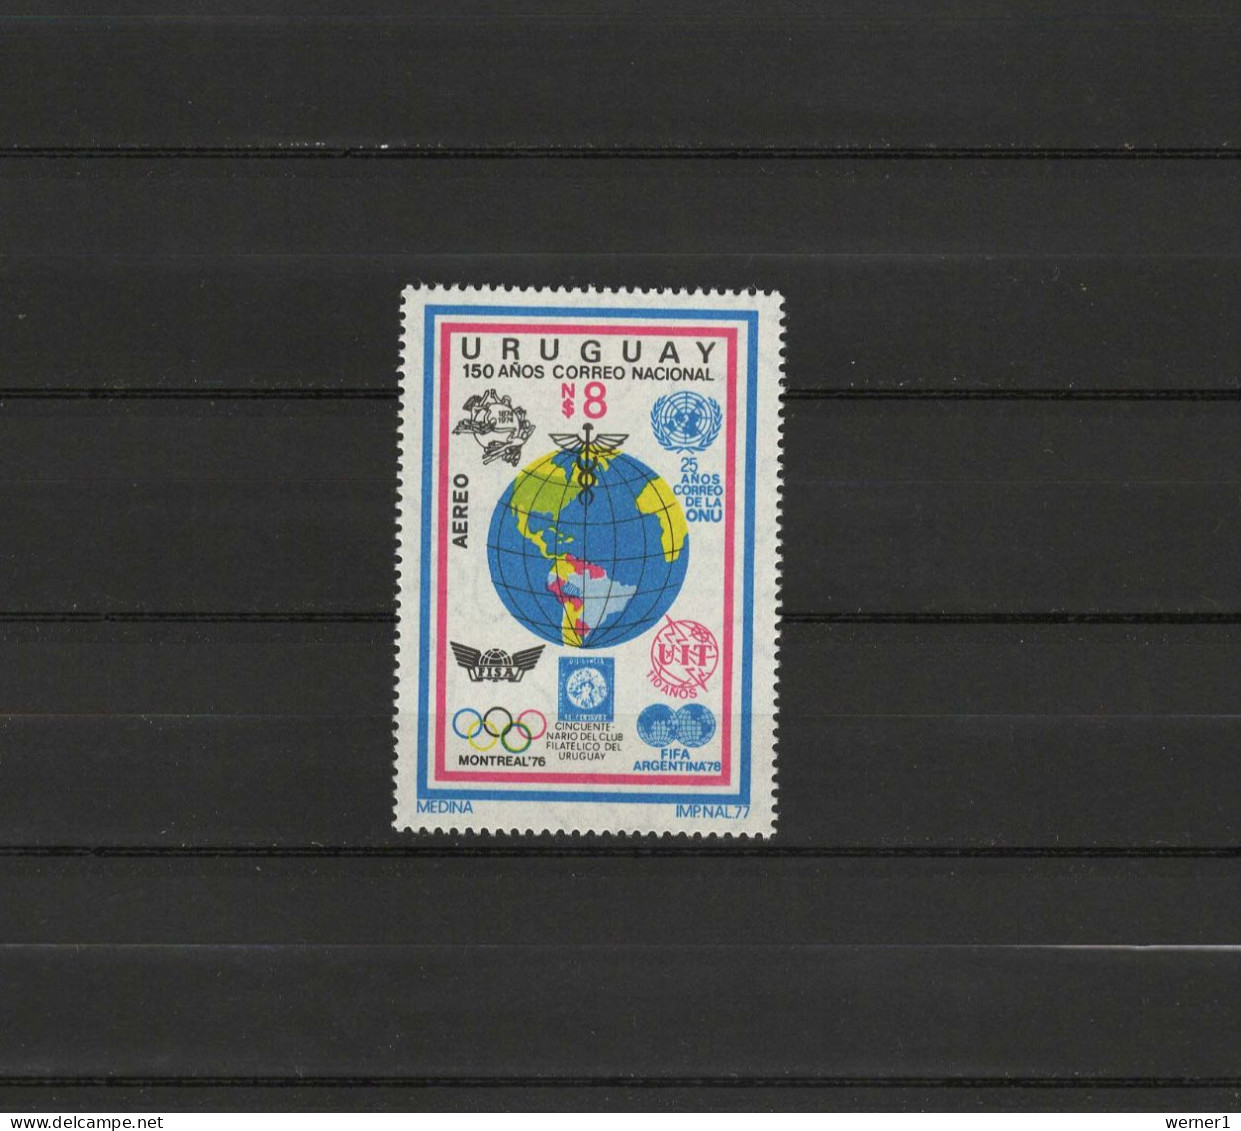 Uruguay 1977 Olympic Games Montreal / Innsbruck, Space ITU, Football Soccer World Cup Etc. Stamp MNH - Ete 1976: Montréal